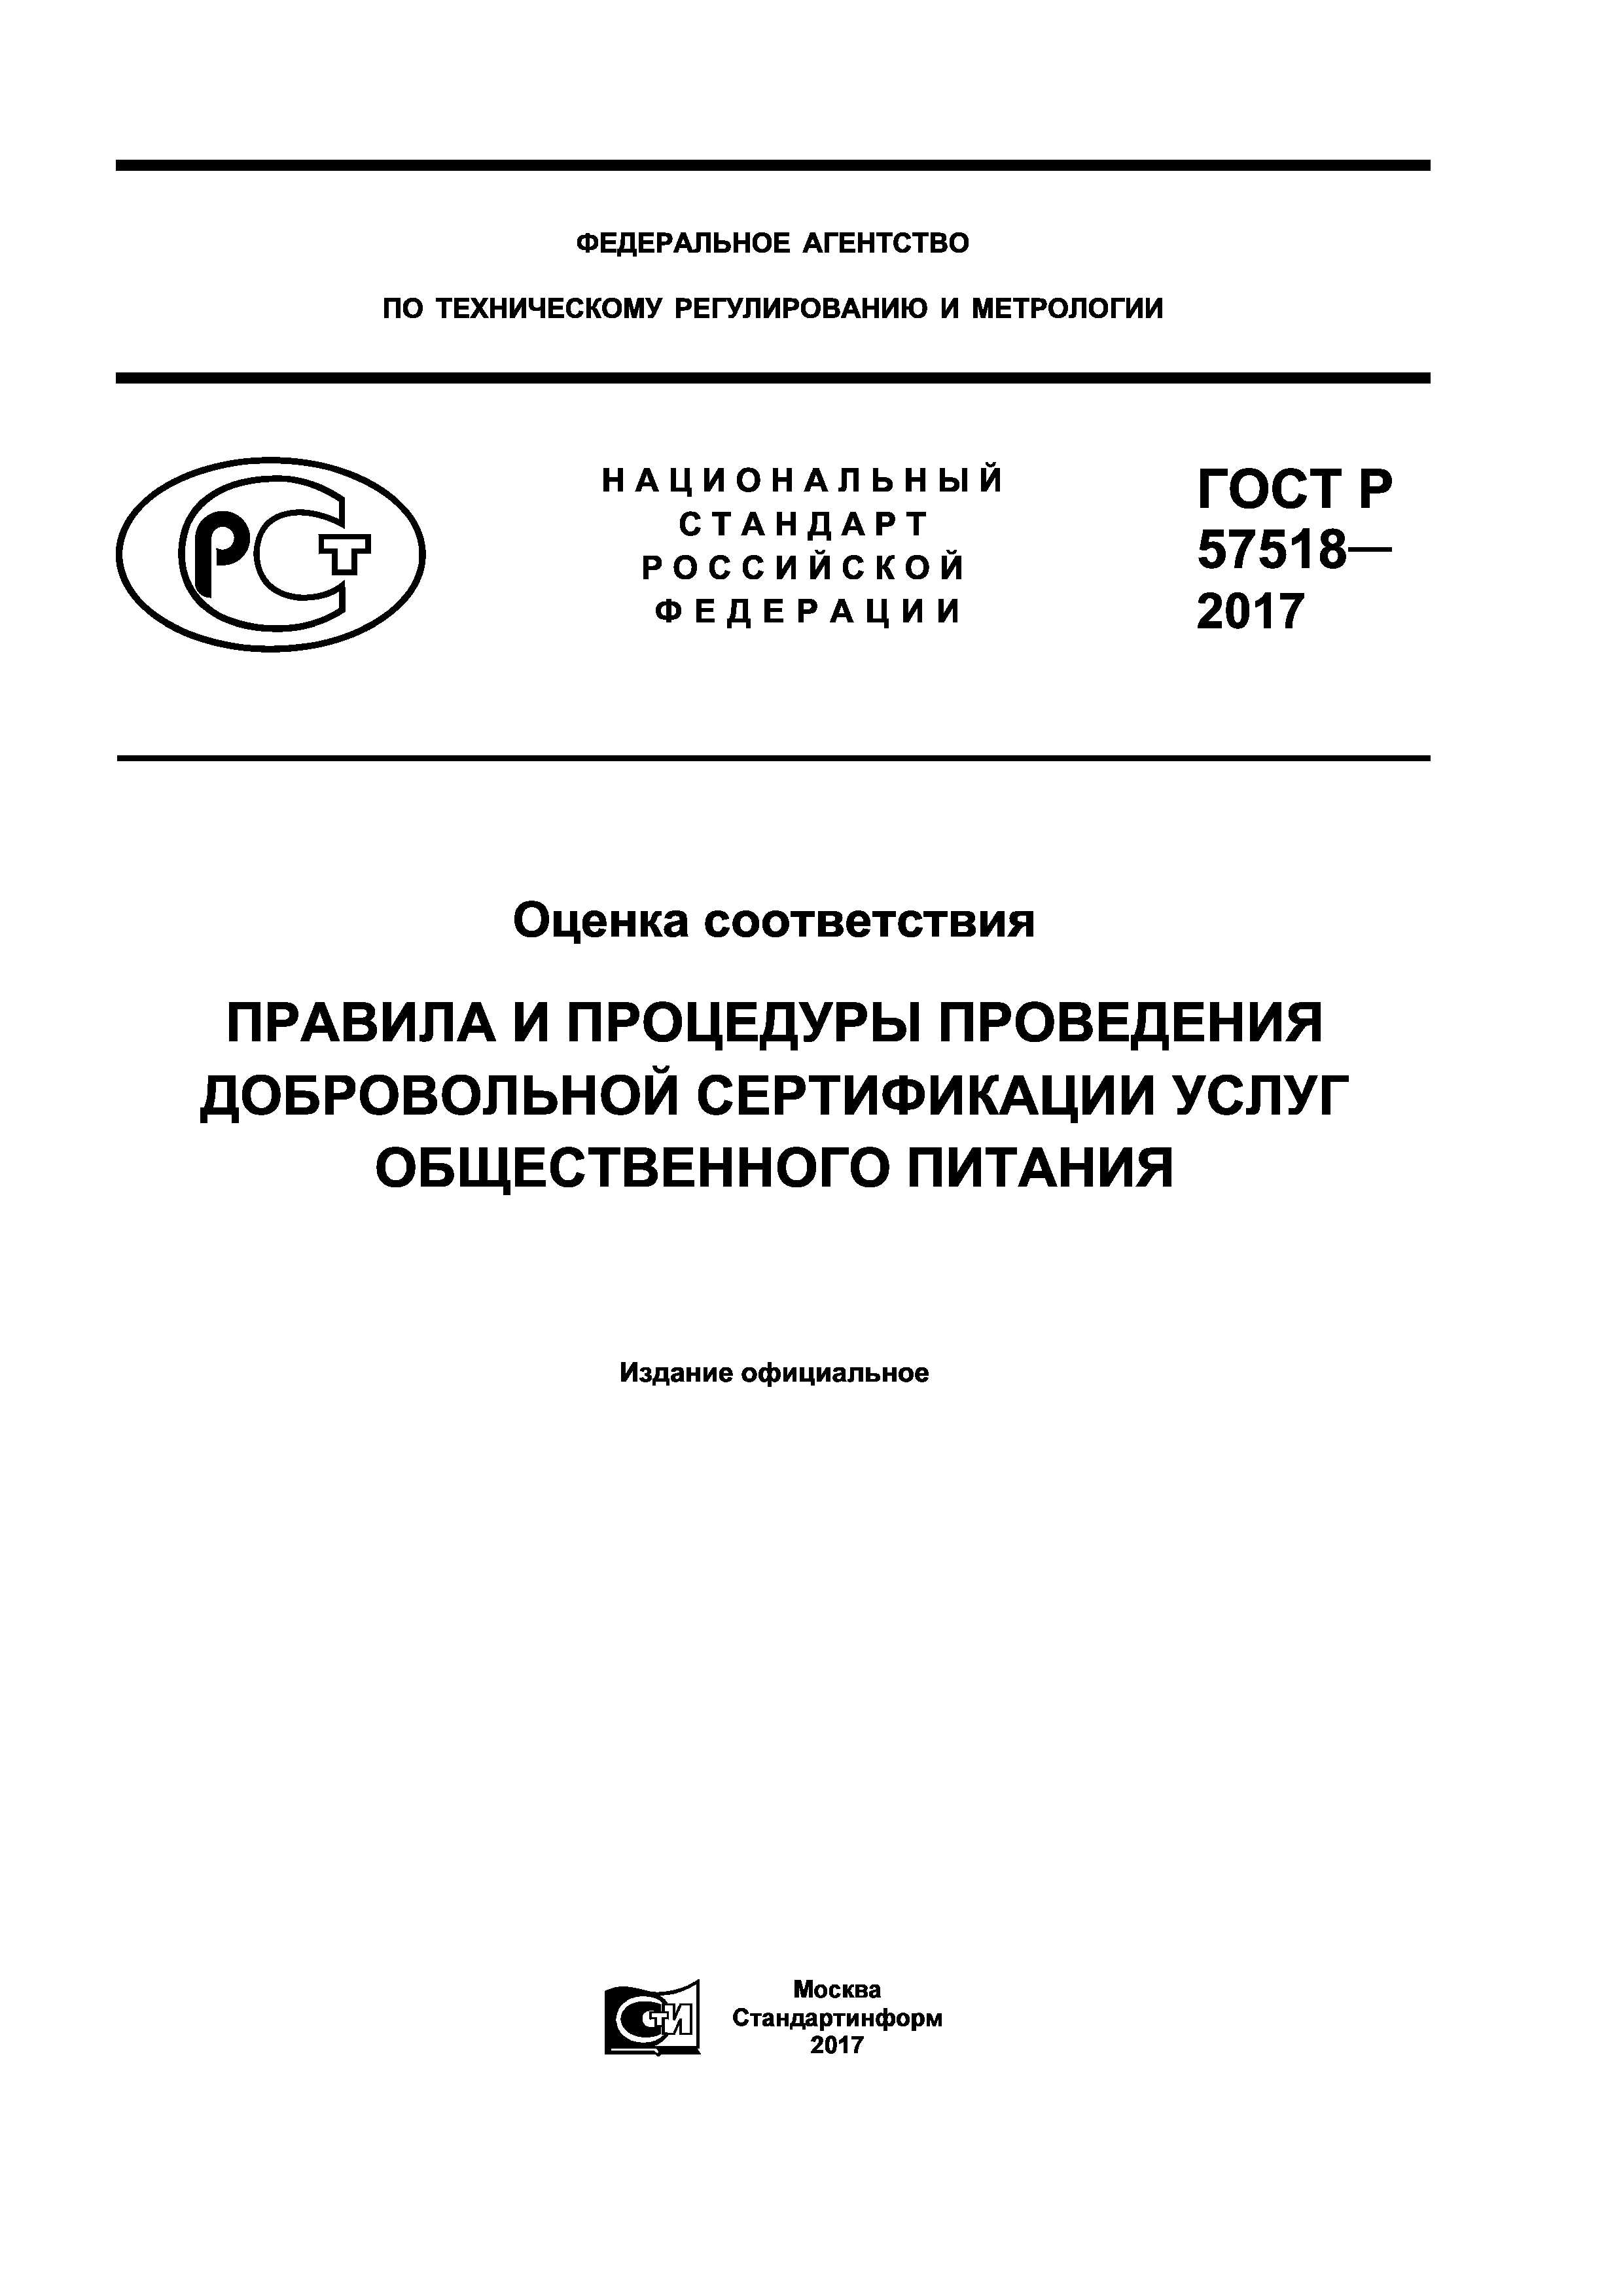 ГОСТ Р 57518-2017